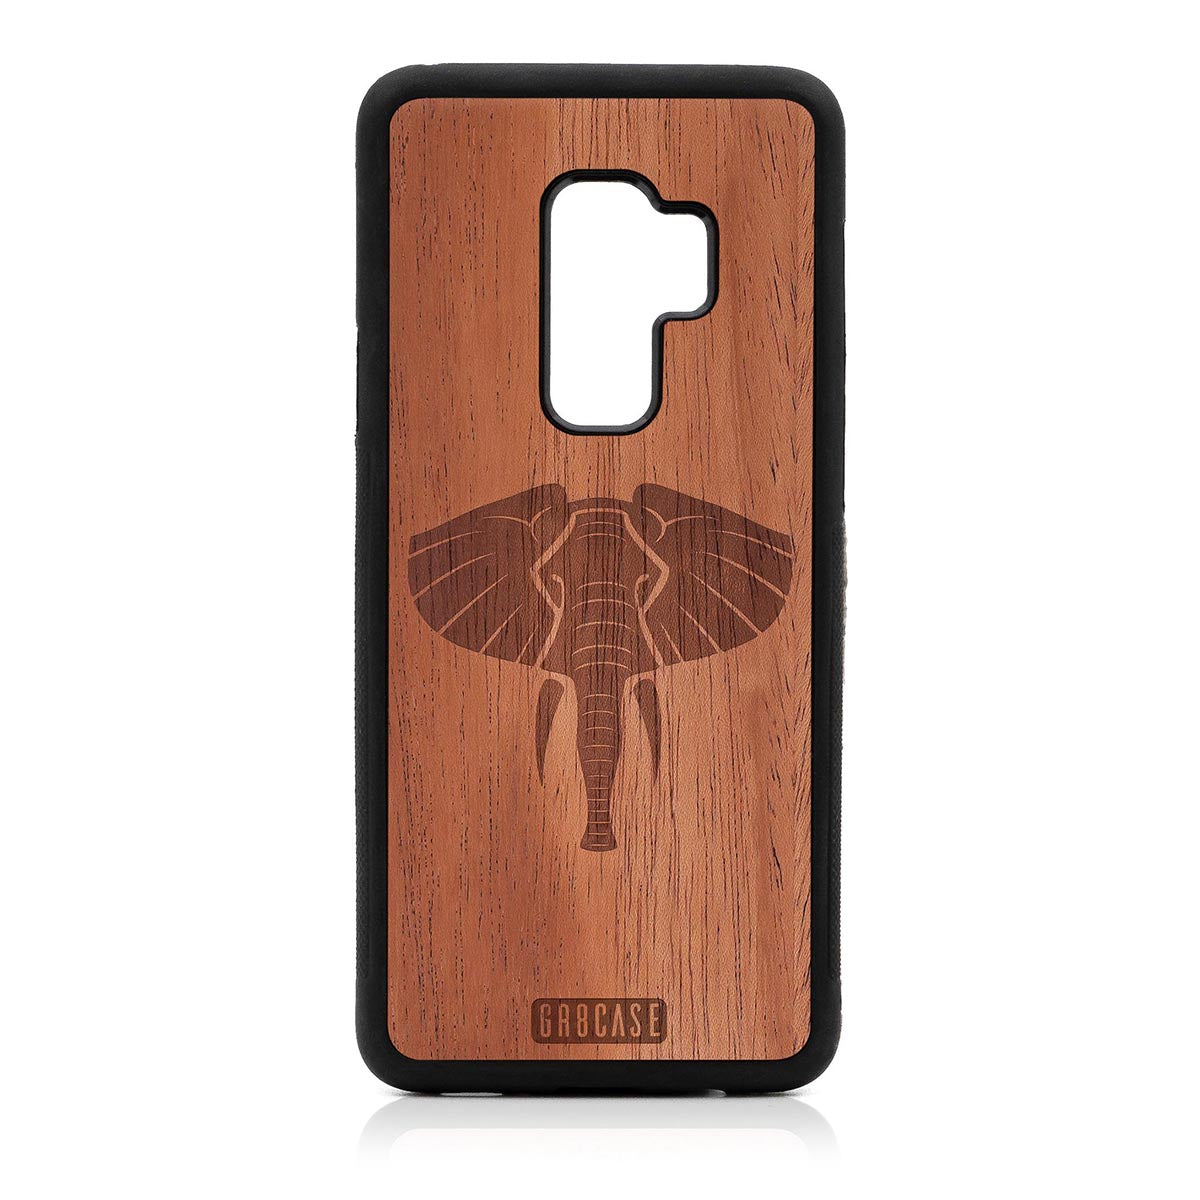 Elephant Design Wood Case Samsung Galaxy S9 Plus by GR8CASE